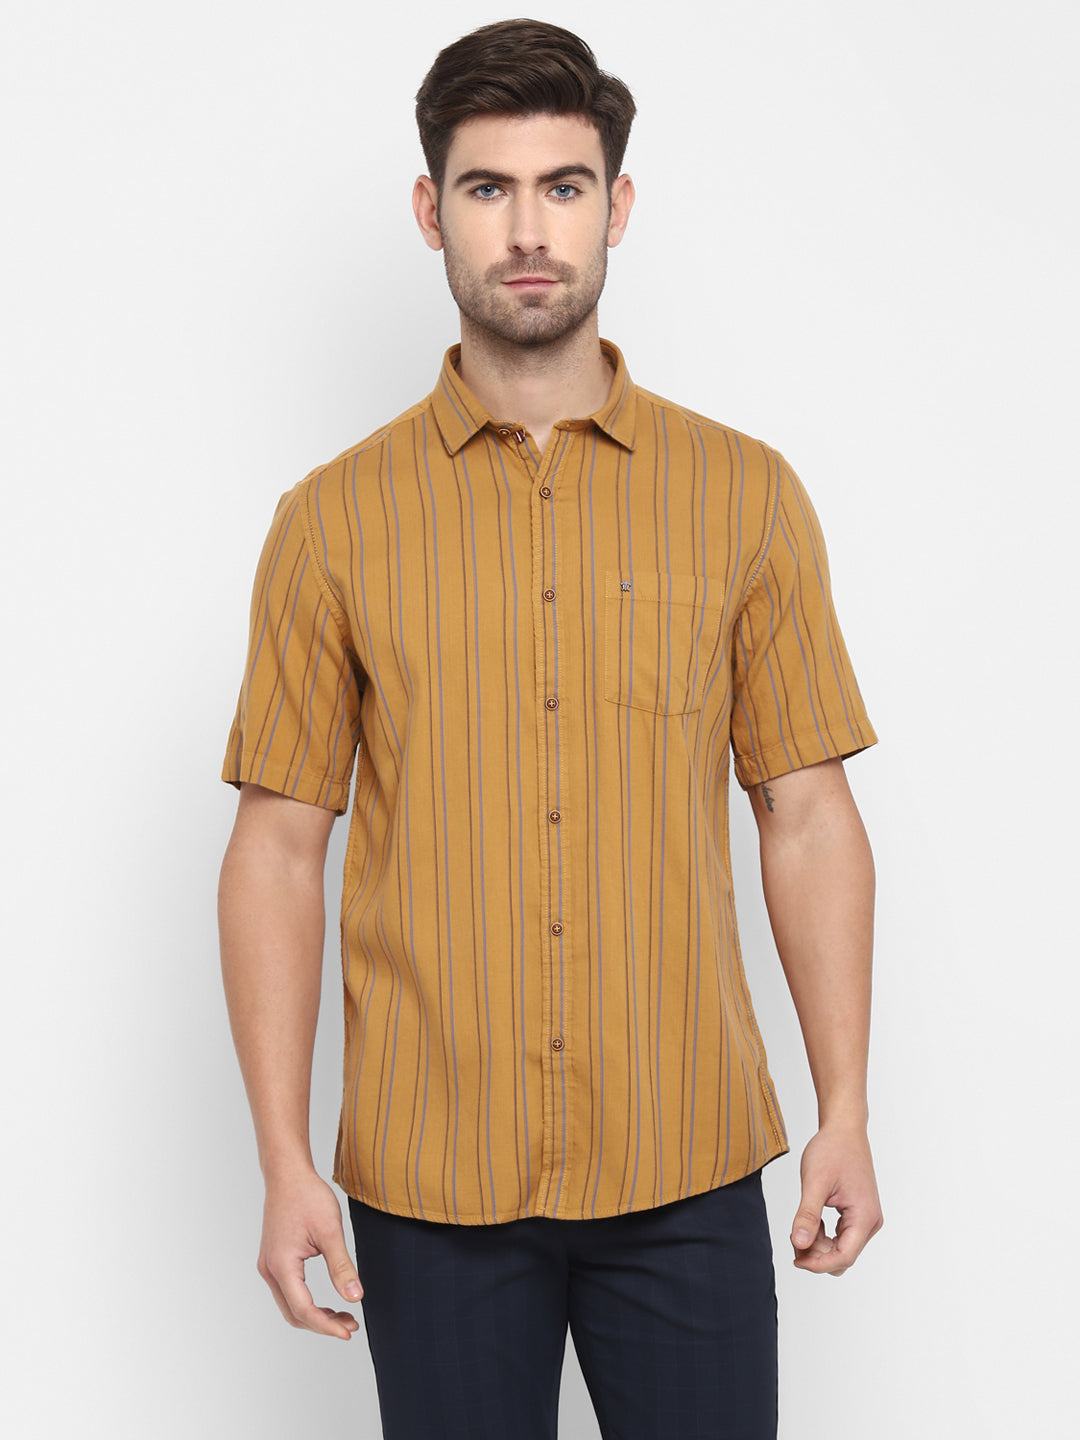 Striped Brown Slim Fit Causal Shirt